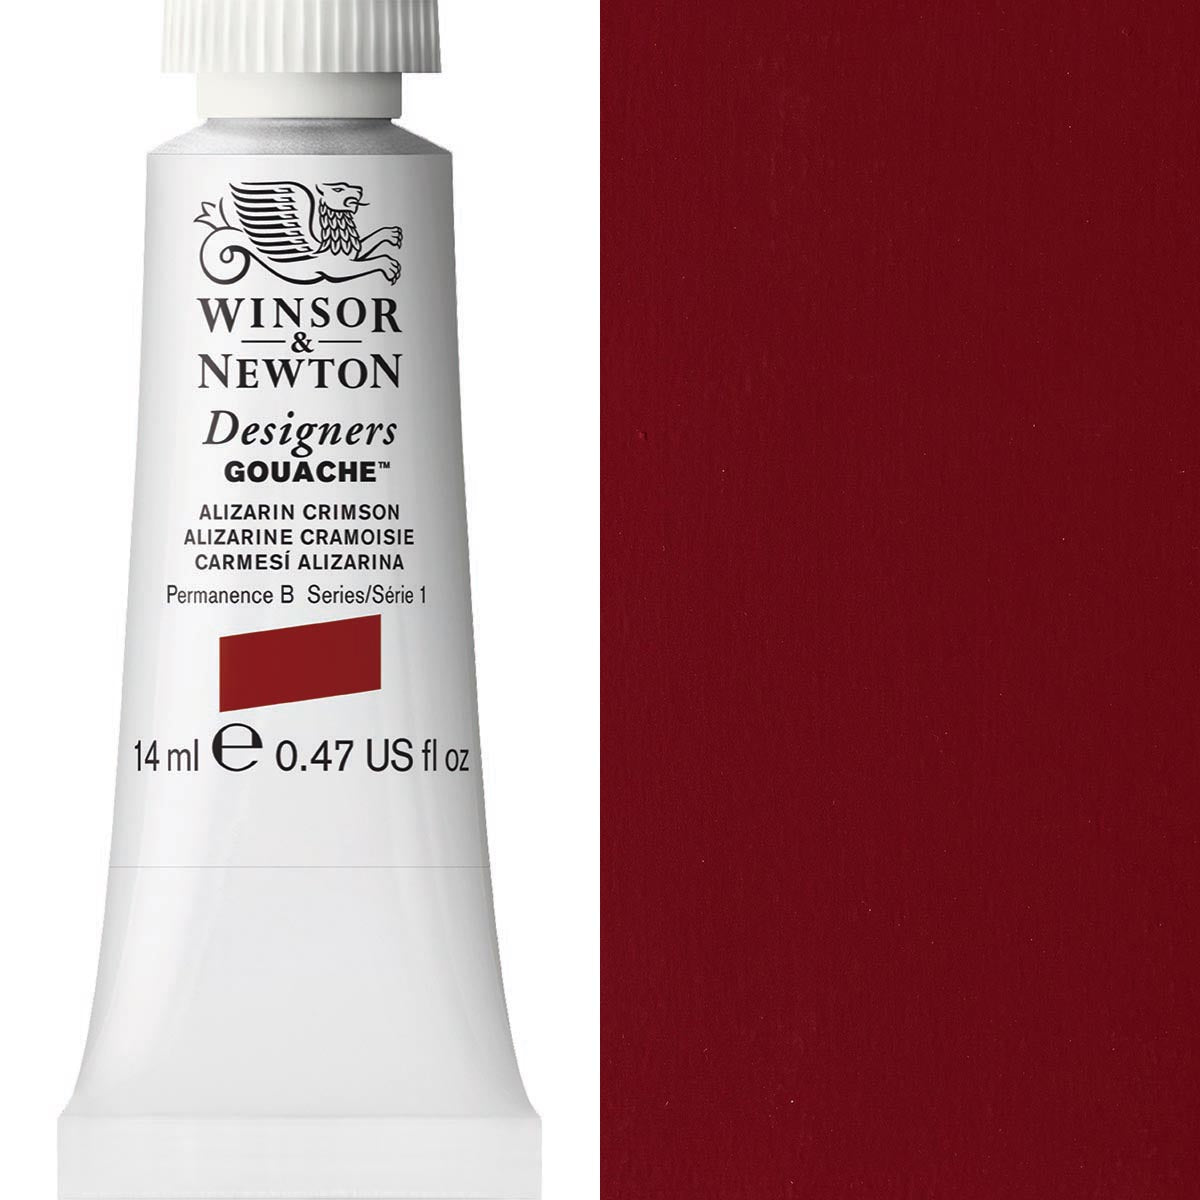 Winsor and Newton - Designers Gouache - 14ml - Alizarin Crimson